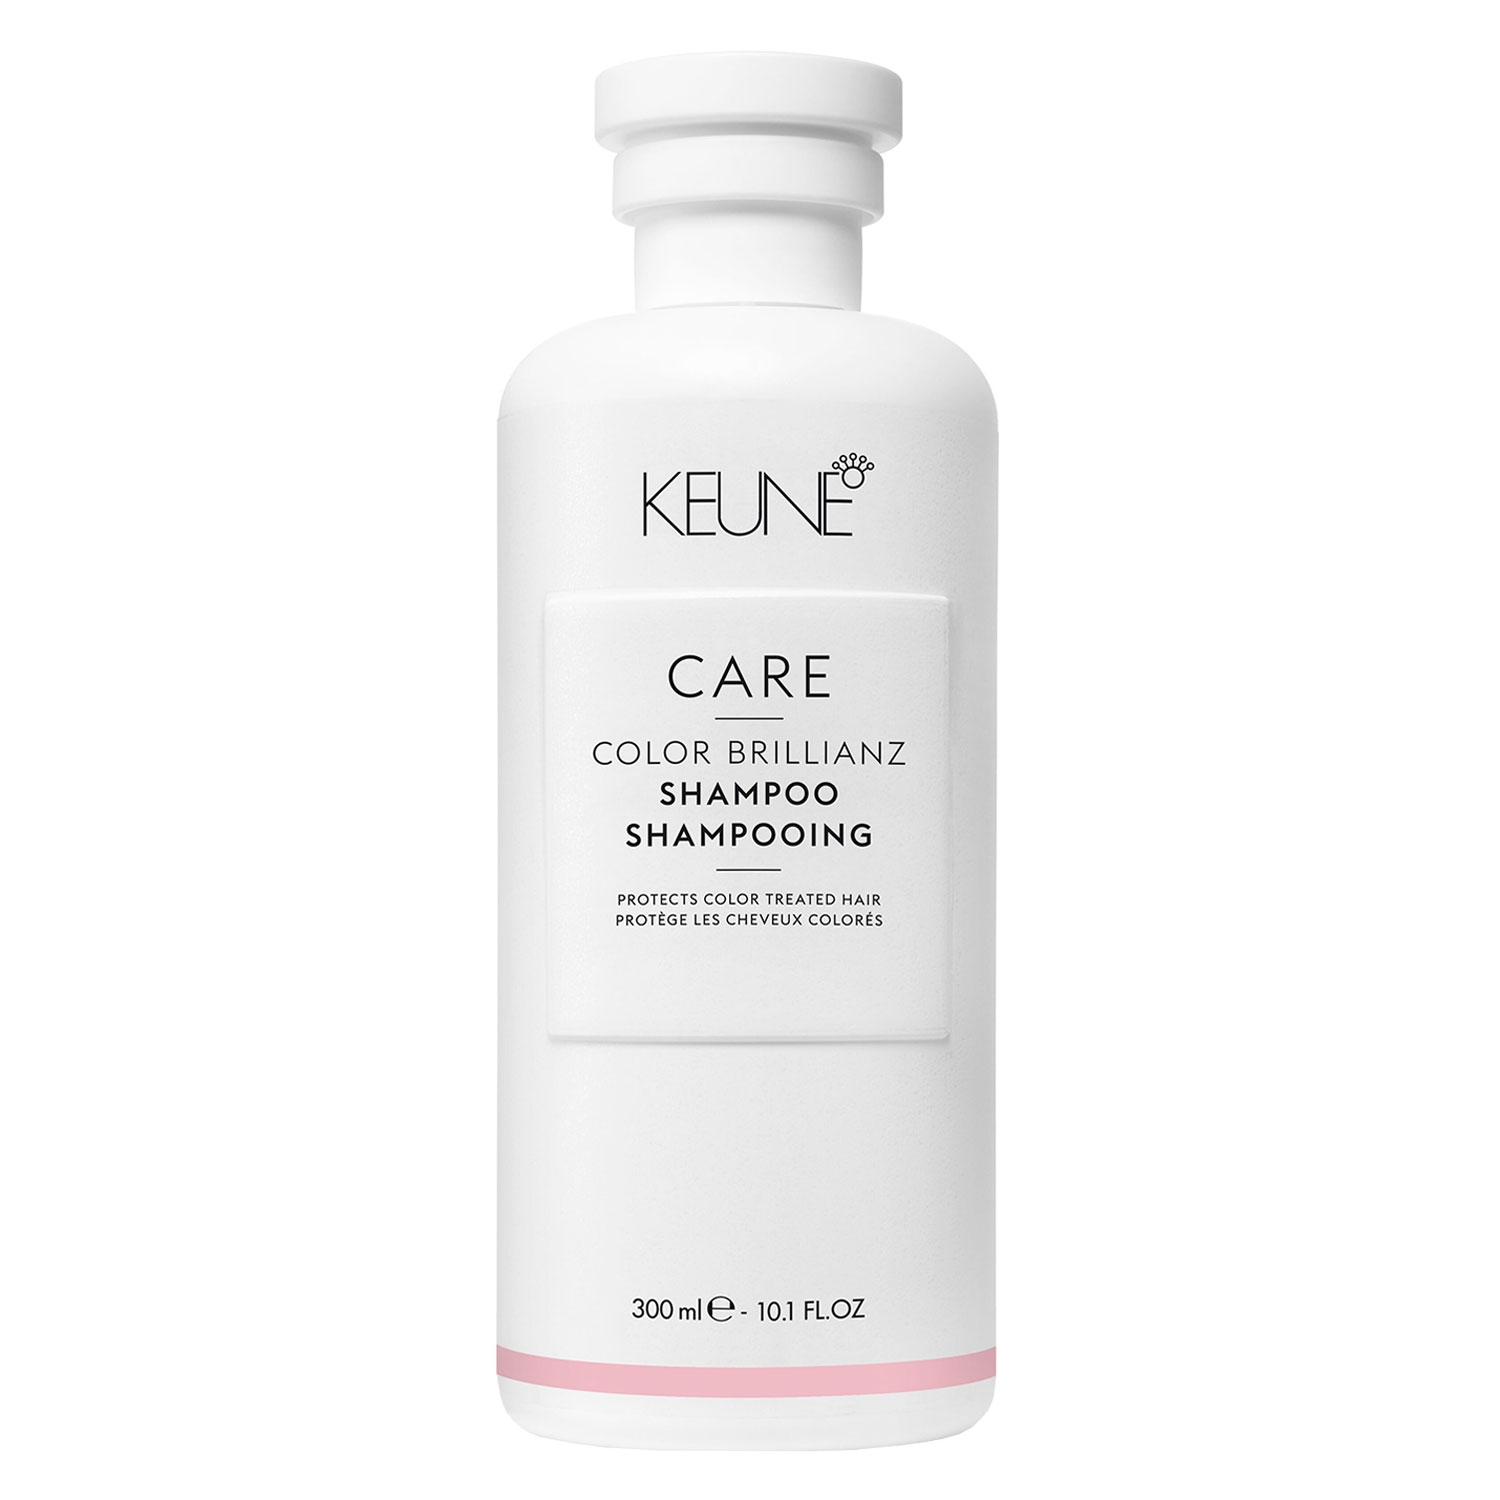 Produktbild von Keune Care - Color Brillianz Shampoo